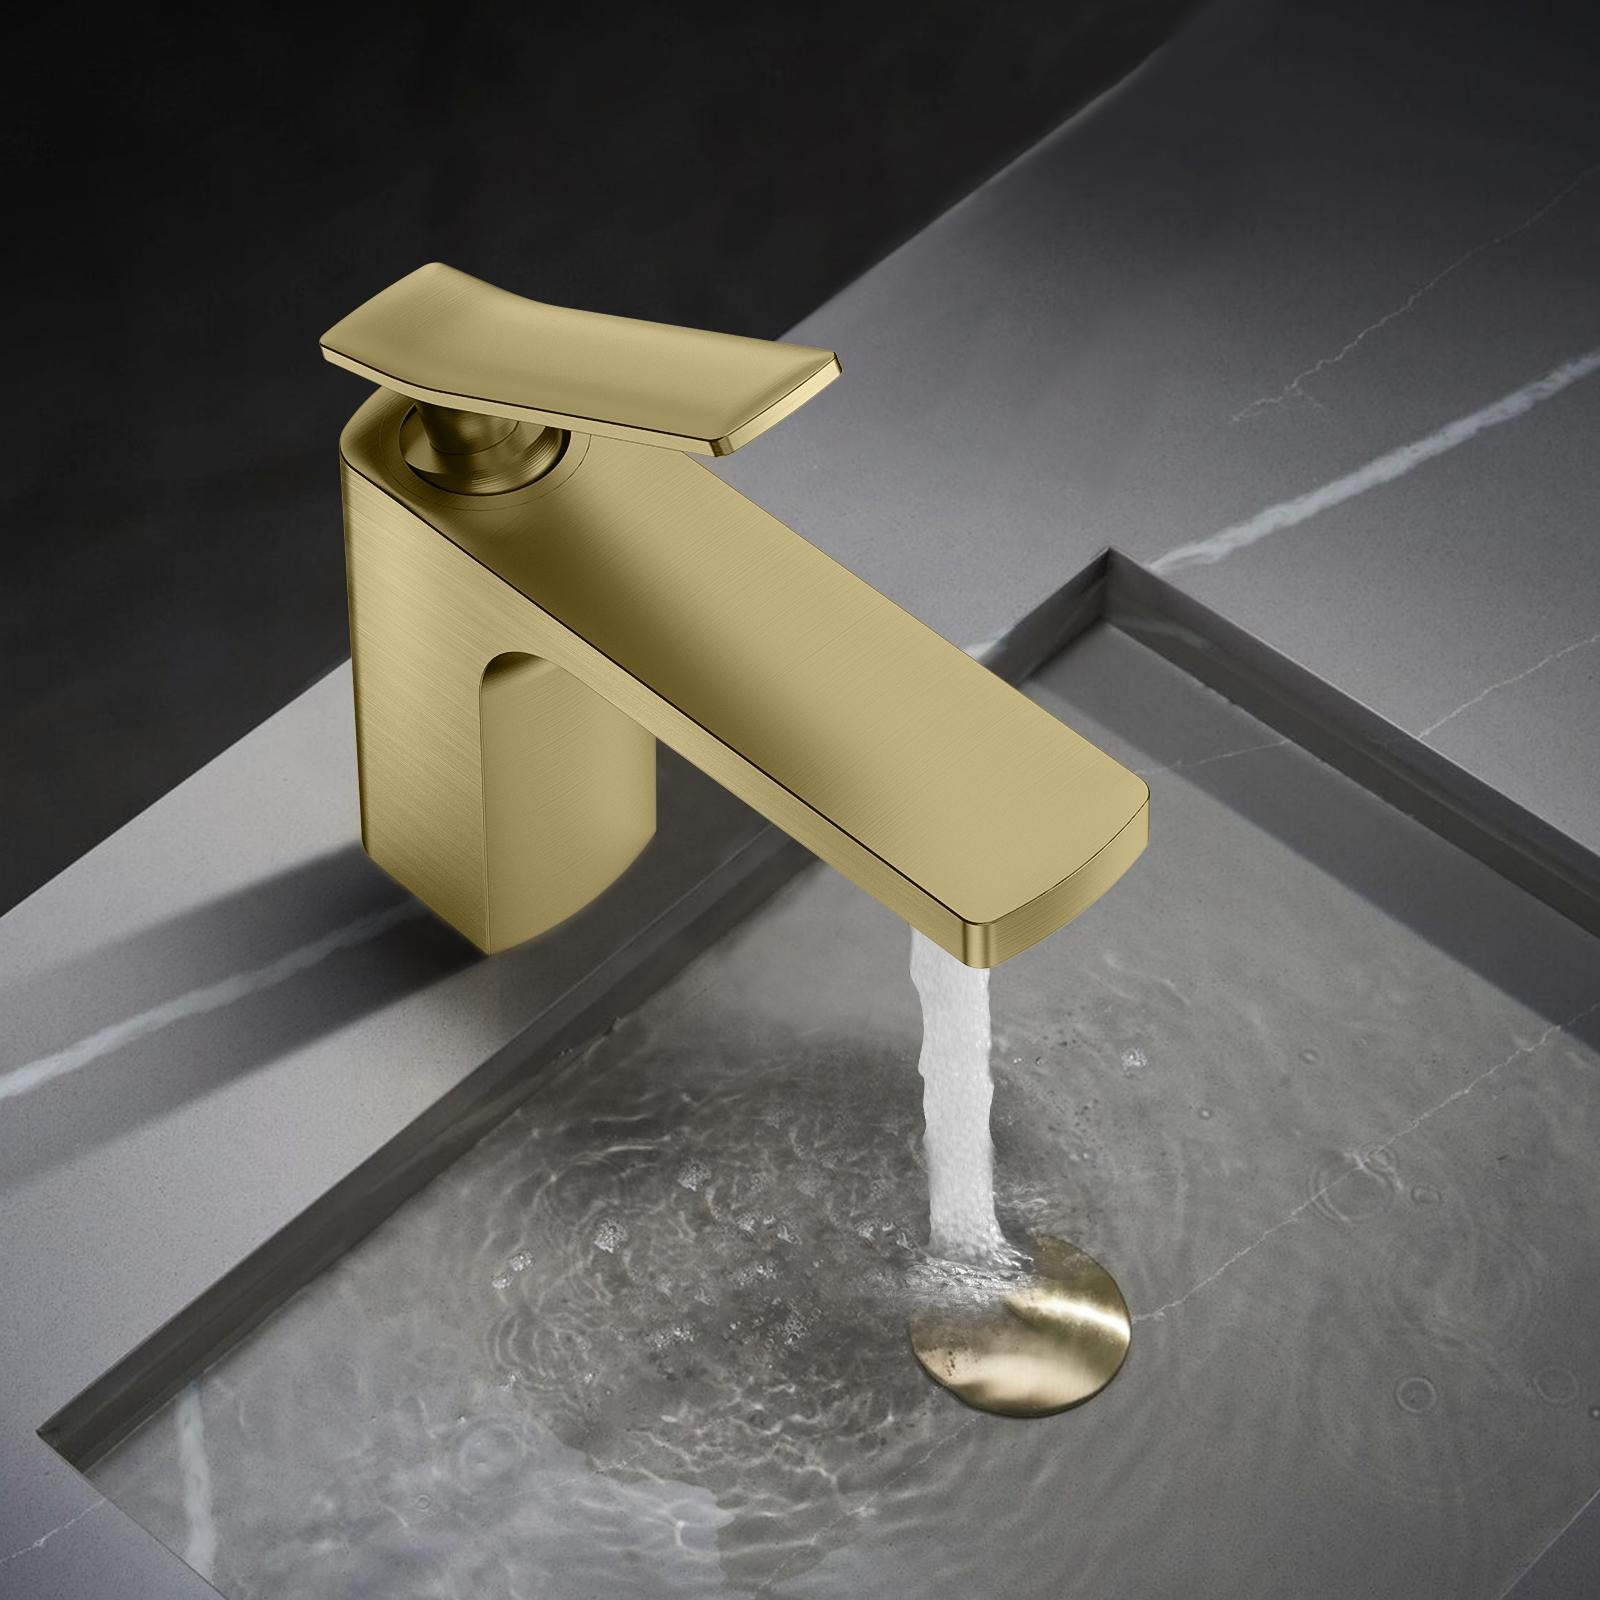 Brass Bathroom Faucet Brushed Gold Bathroom Sink Faucet Single Handle Bathroom Faucet Single Hole RV Bathroom Faucet